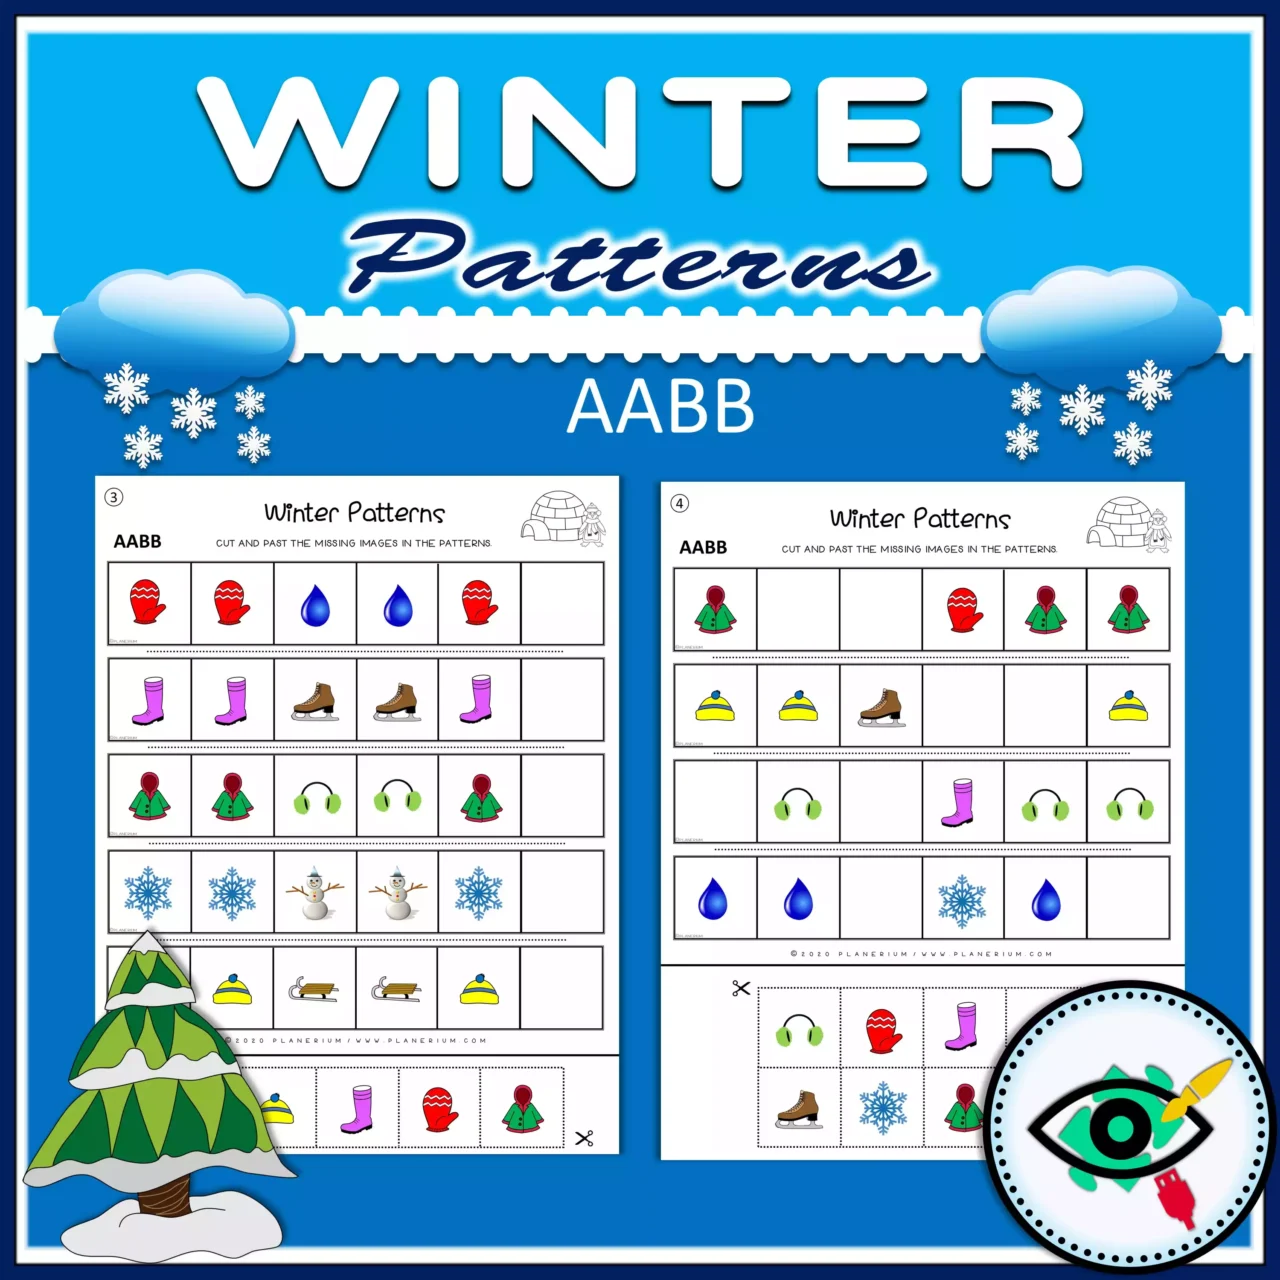 Winter - Patterns Activity - Image Title 3